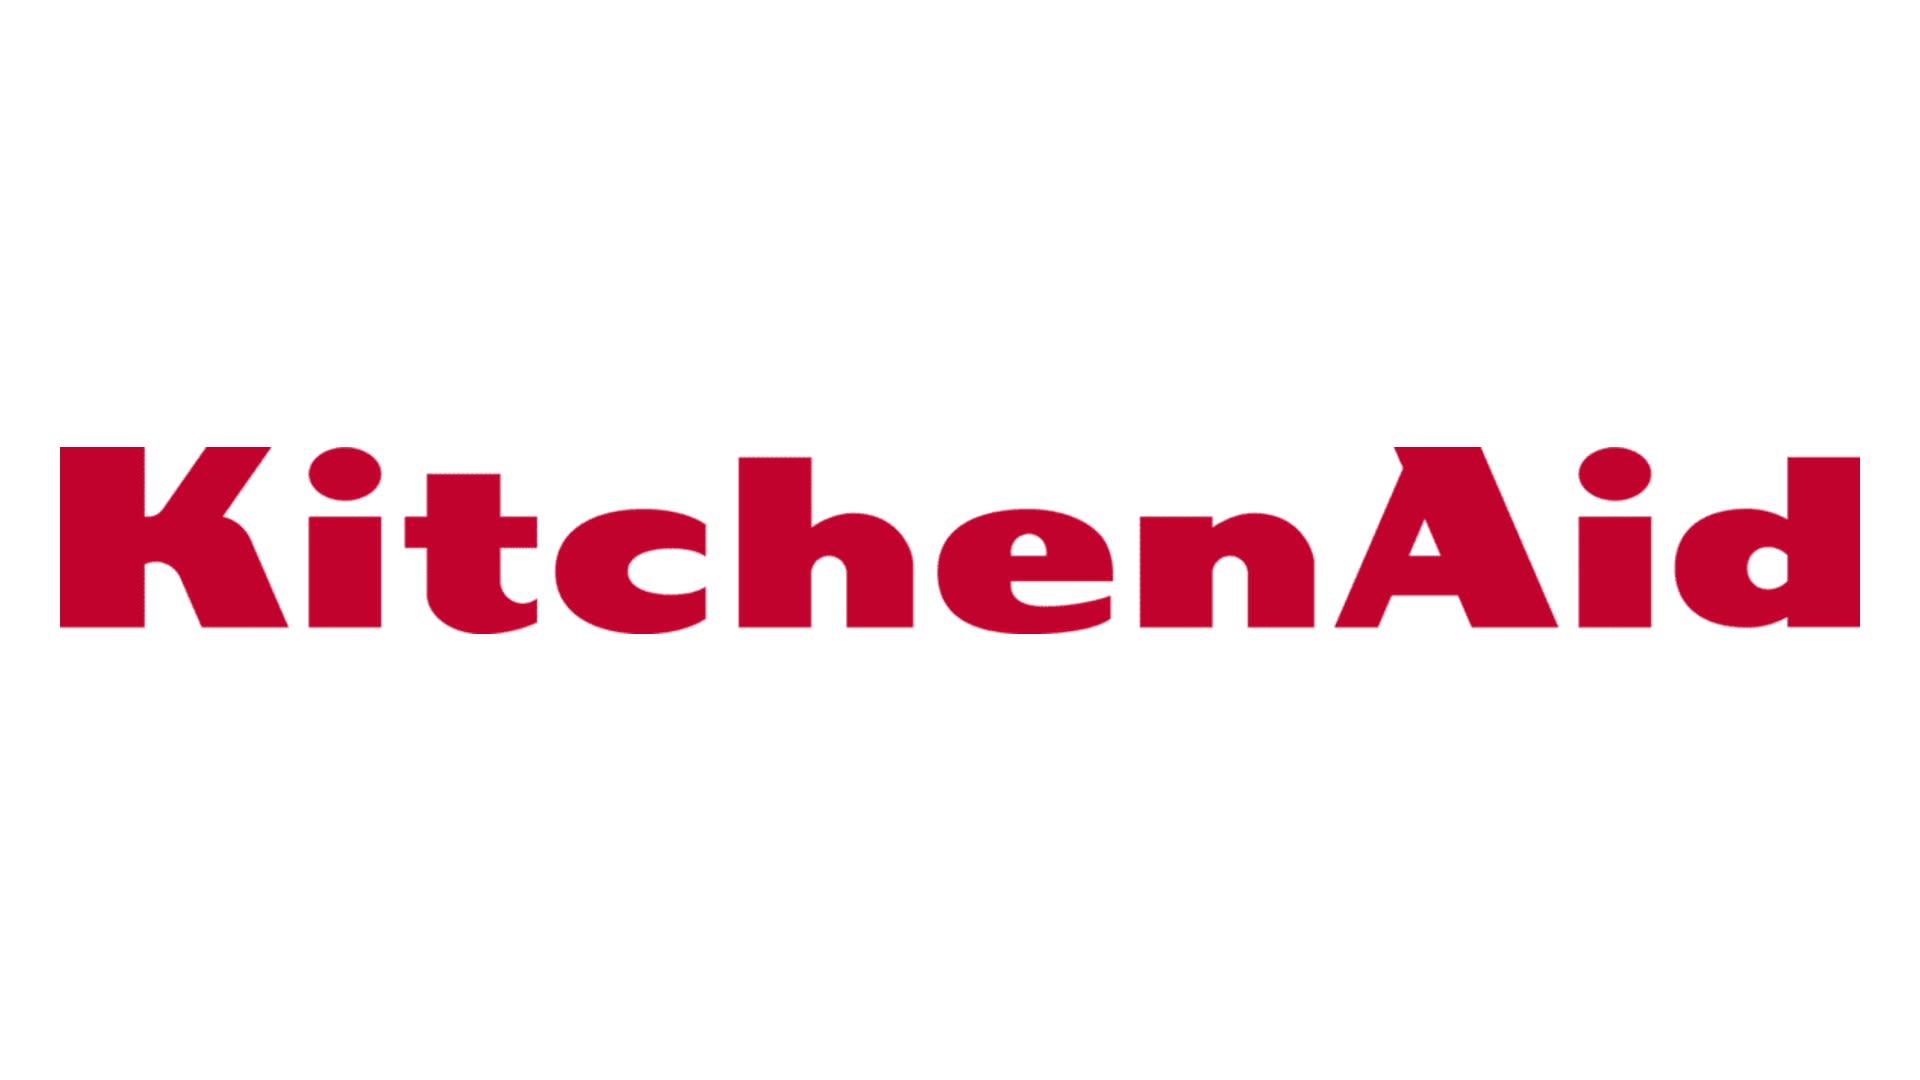 Abbildung des roten KITCHENAID Logos 